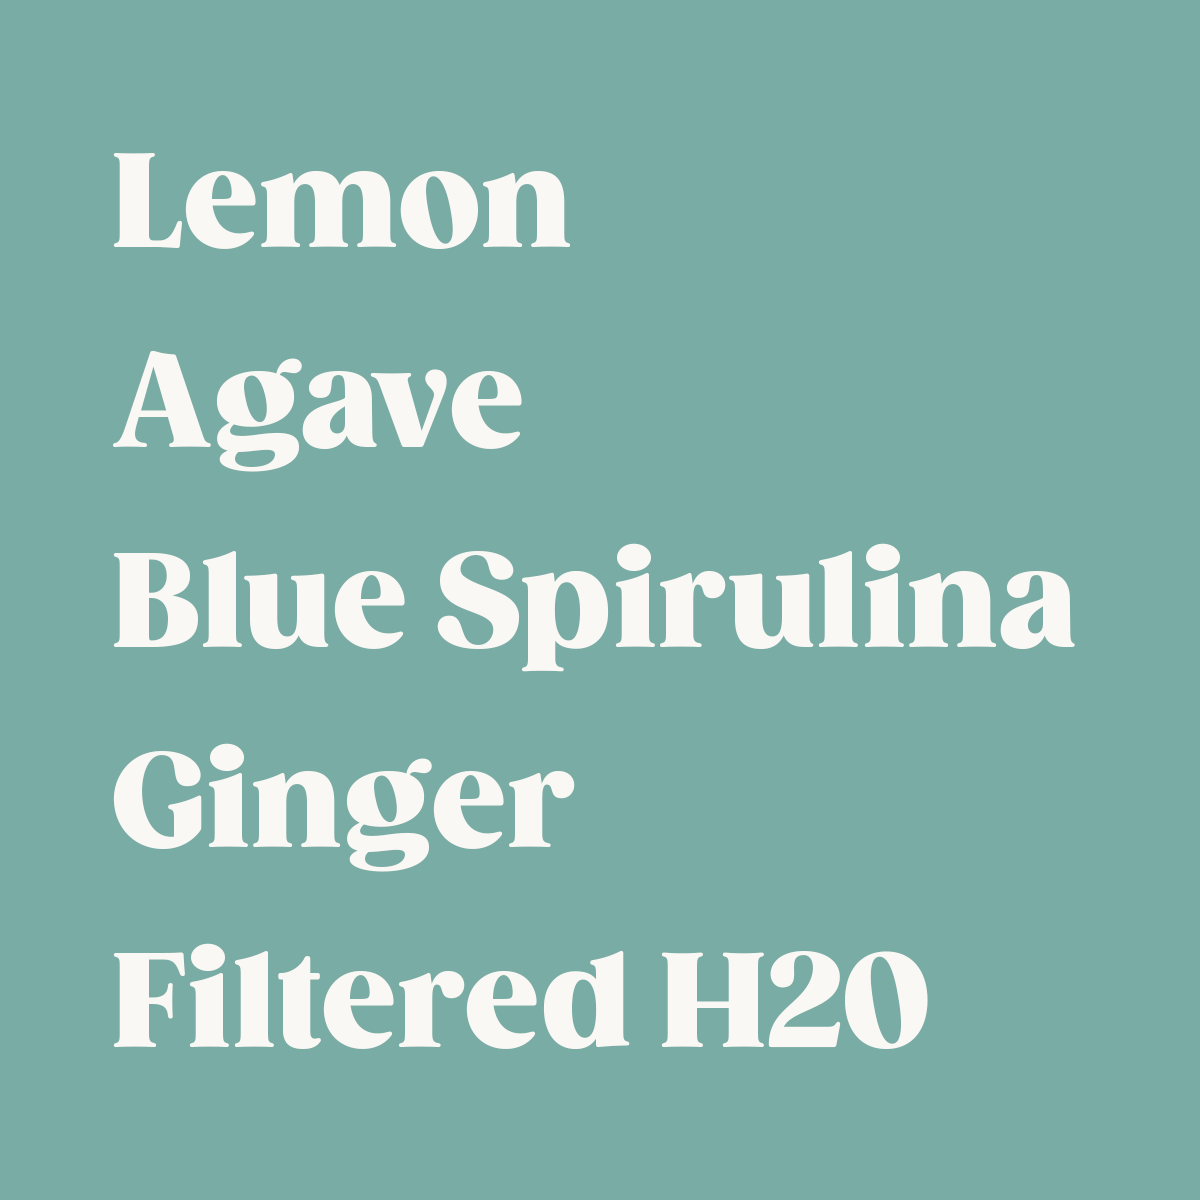 PUR juice cleanse cold pressed juice BLUE MAJIK LEMONADE Cold Pressed Lemonade | Refreshing & Delicious | PUR Lemonade